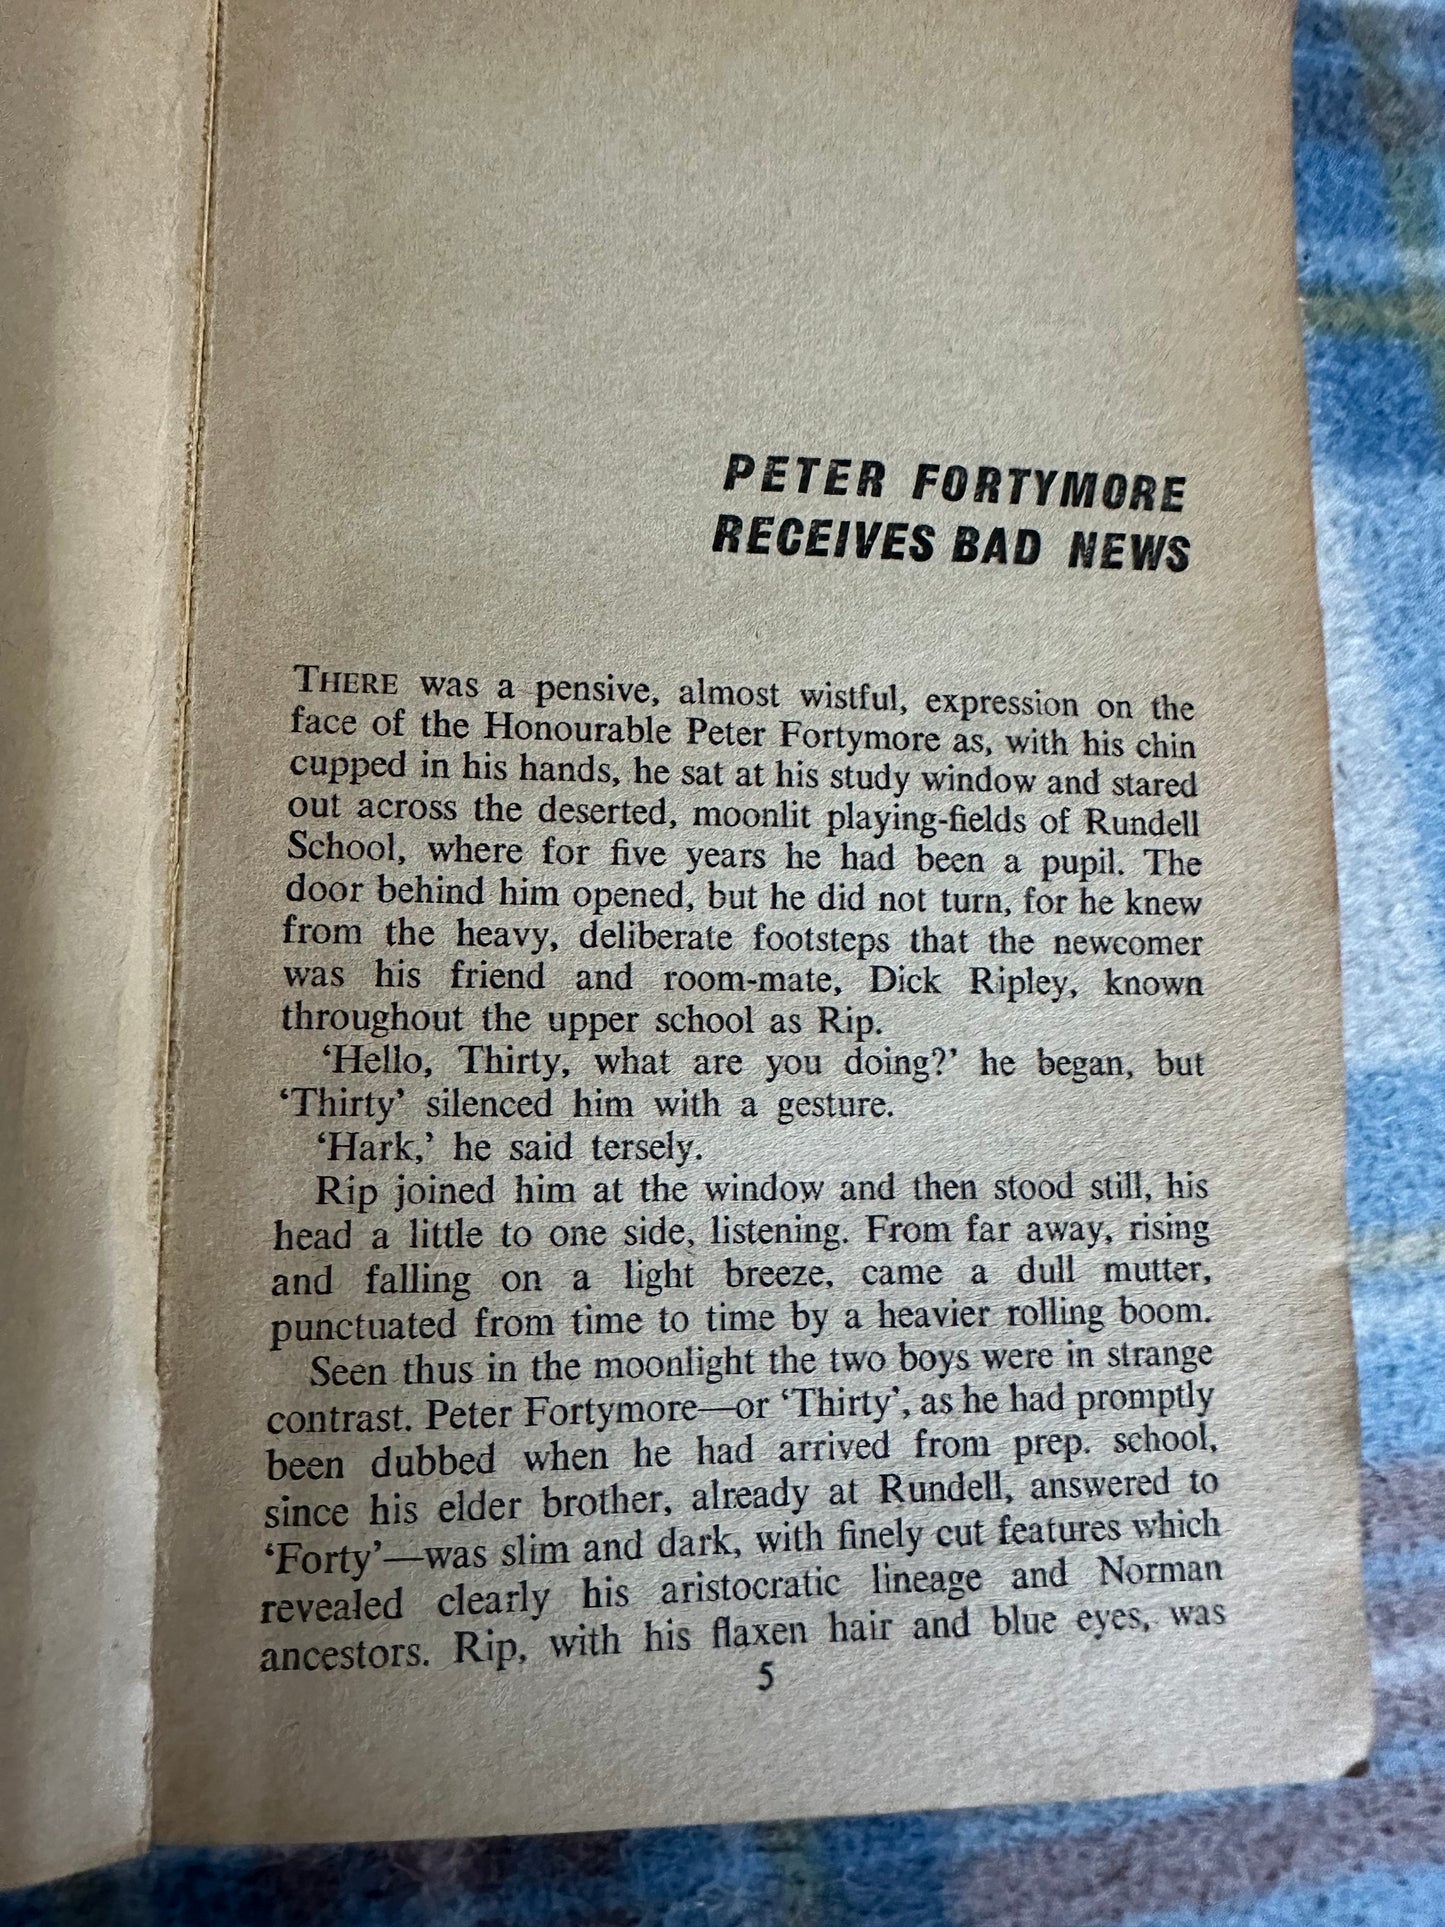 1965 Biggles The Rescue Flight - Capt. W.E. Johns(Armada paperbacks)